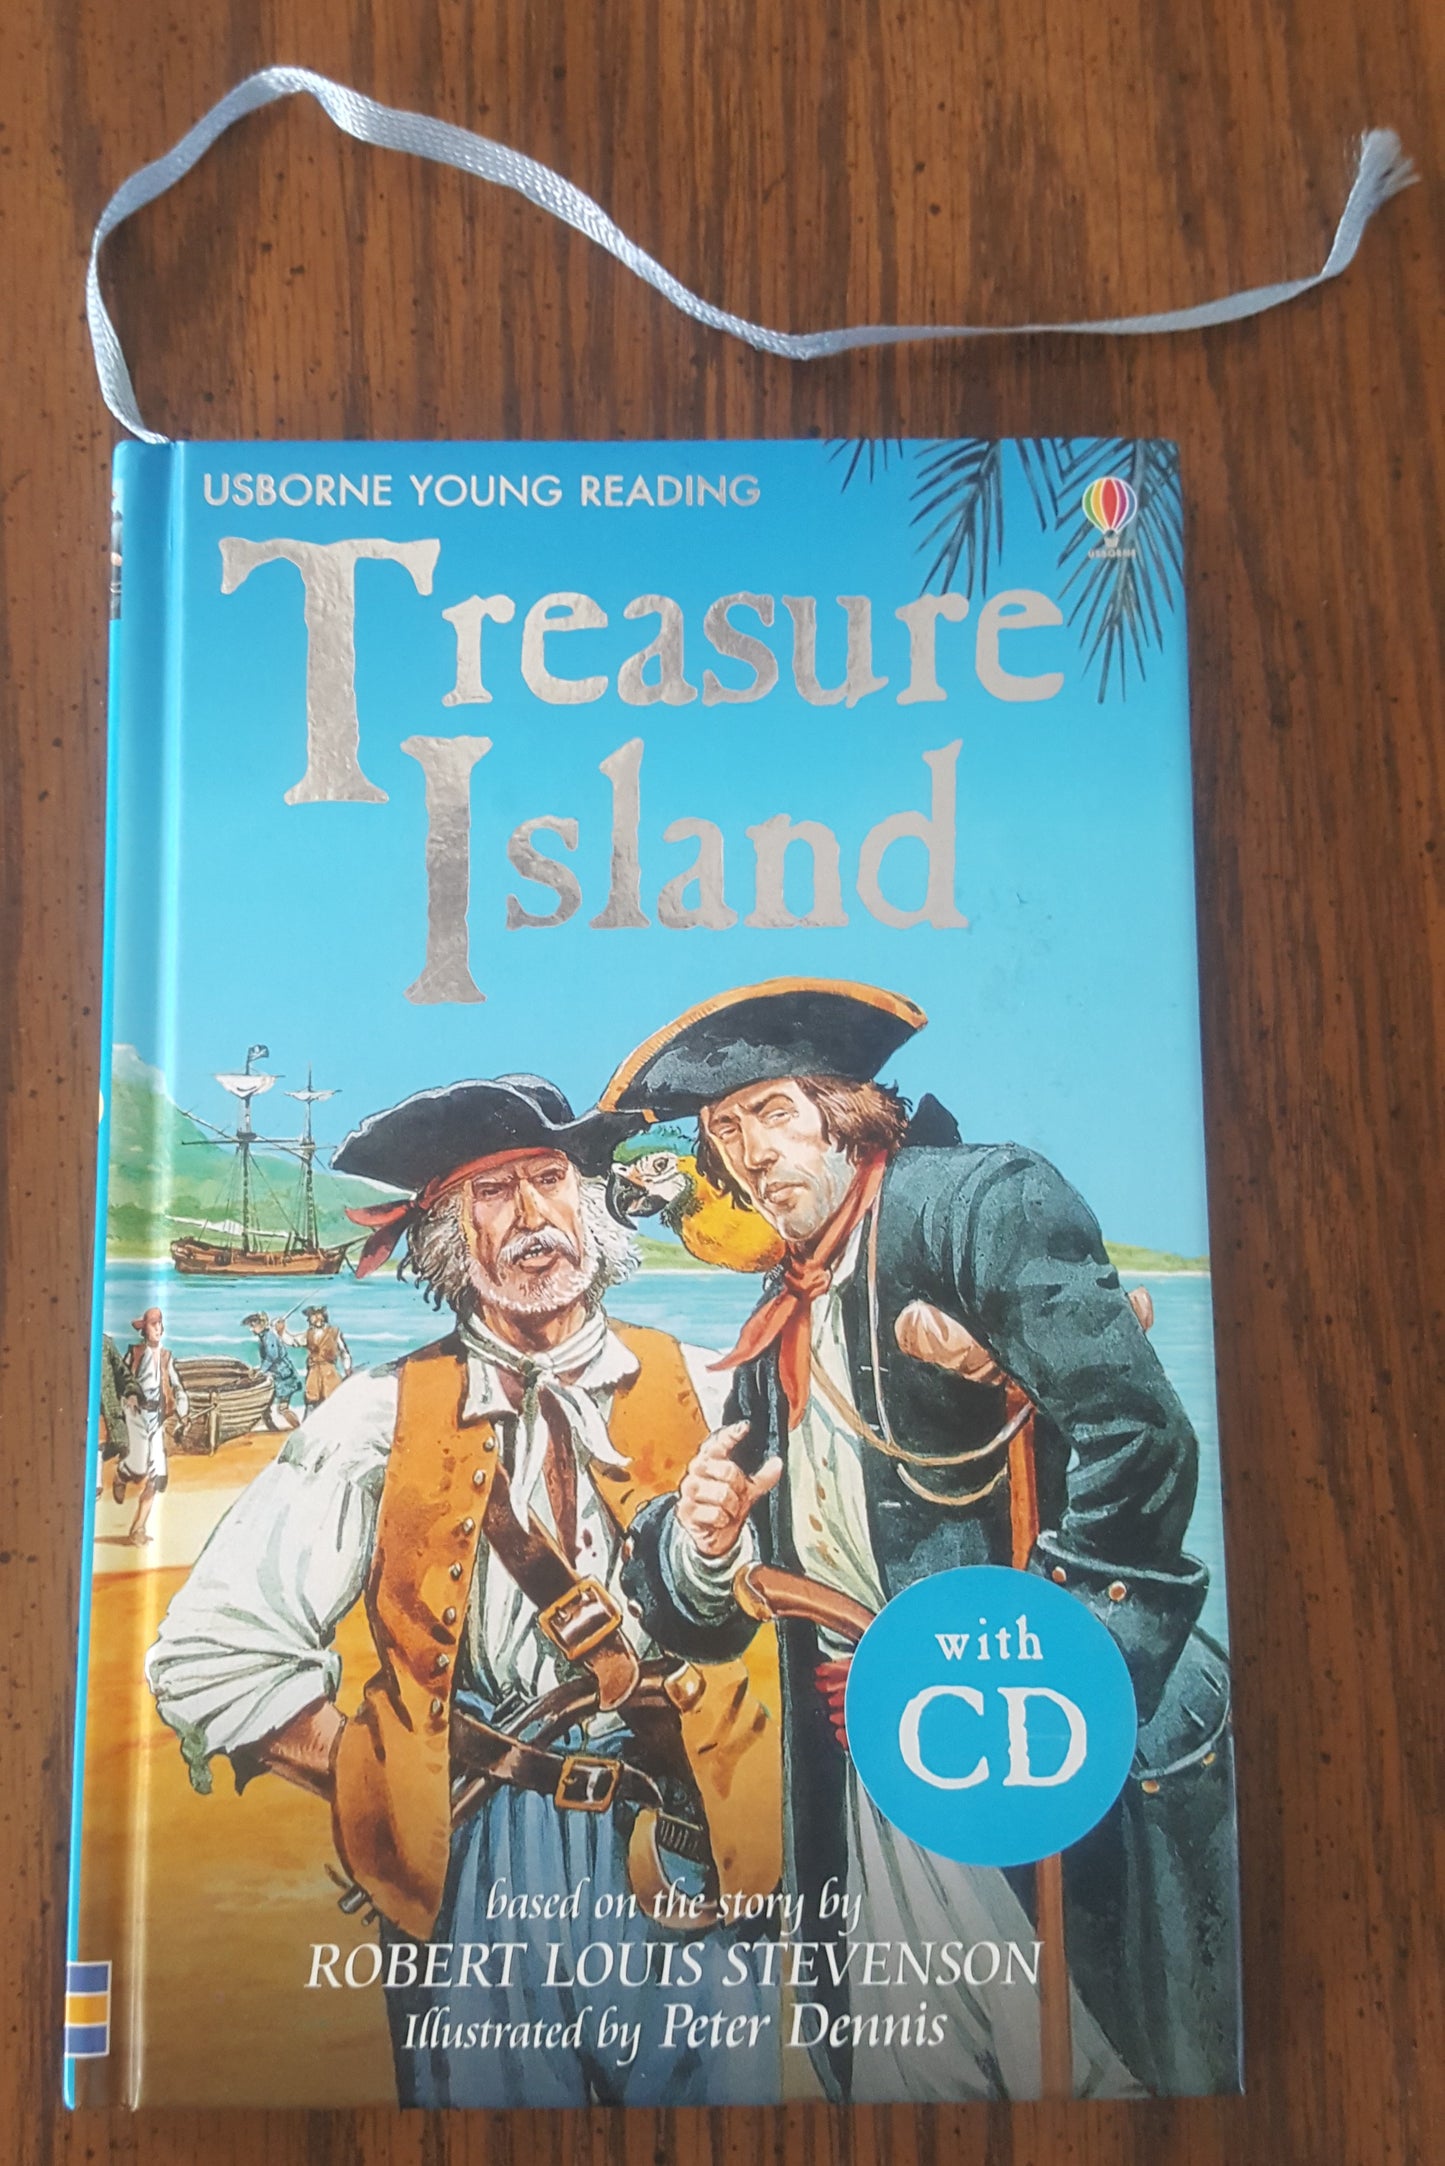 Usborne Treasure Island with CD